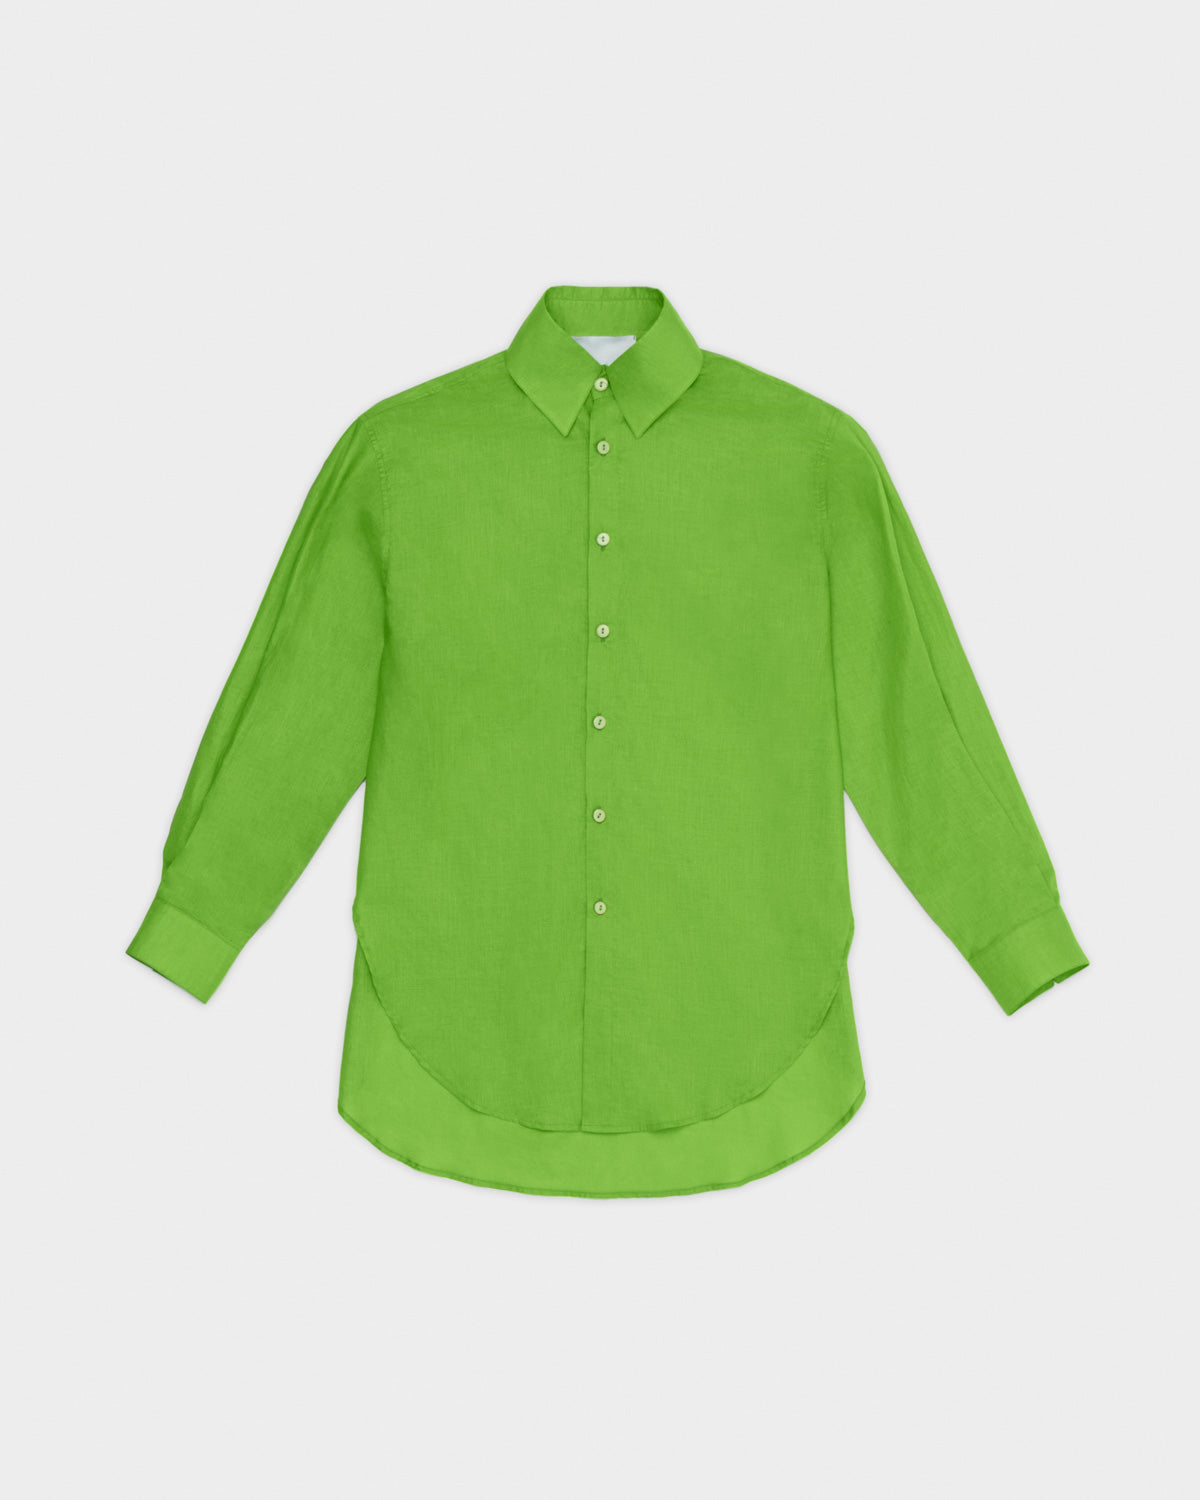 Loose-Fit Green Shirt